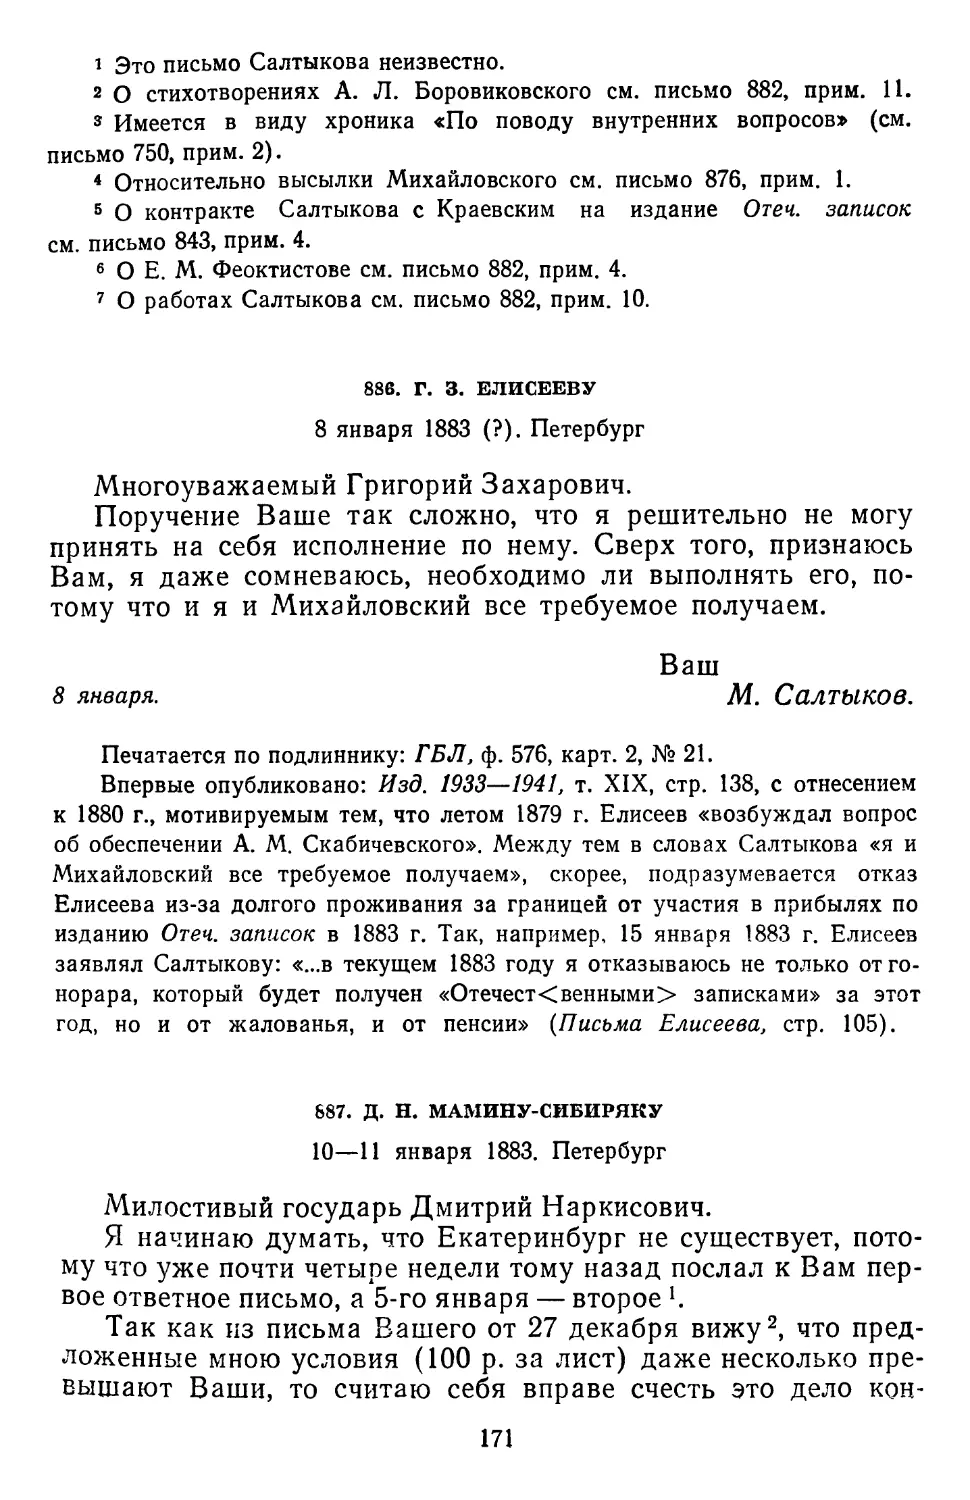 887.Д. Н. Мамину-Сибиряку. 10—11 января 1883. Петербург